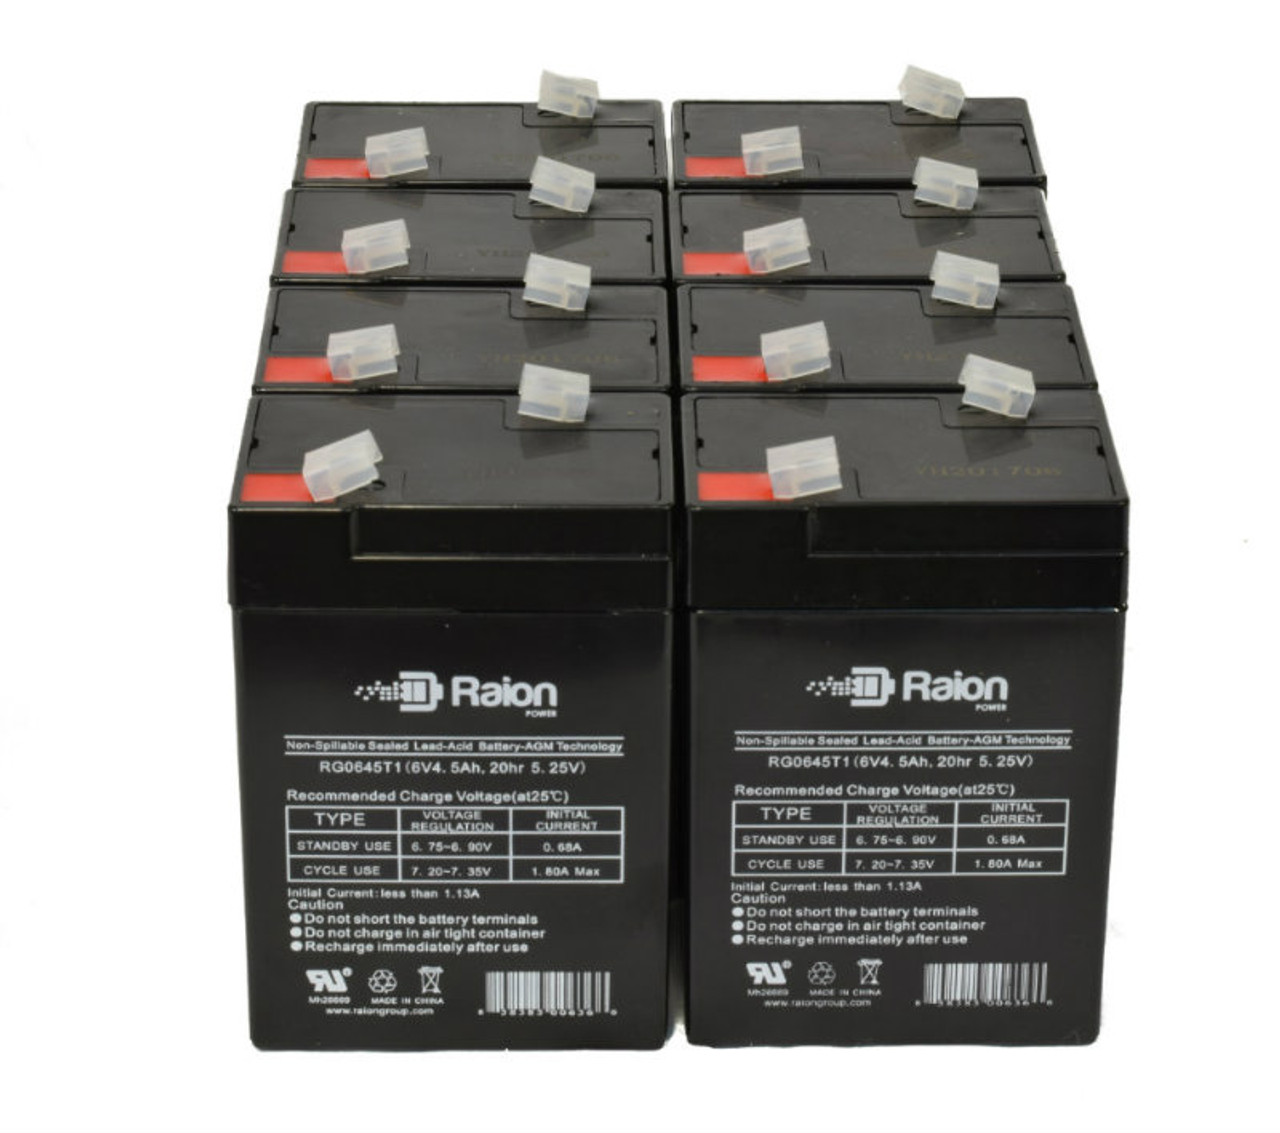 Raion Power 6V 4.5Ah Replacement Emergency Light Battery for Sentry Lite SCR-525-20 - 8 Pack